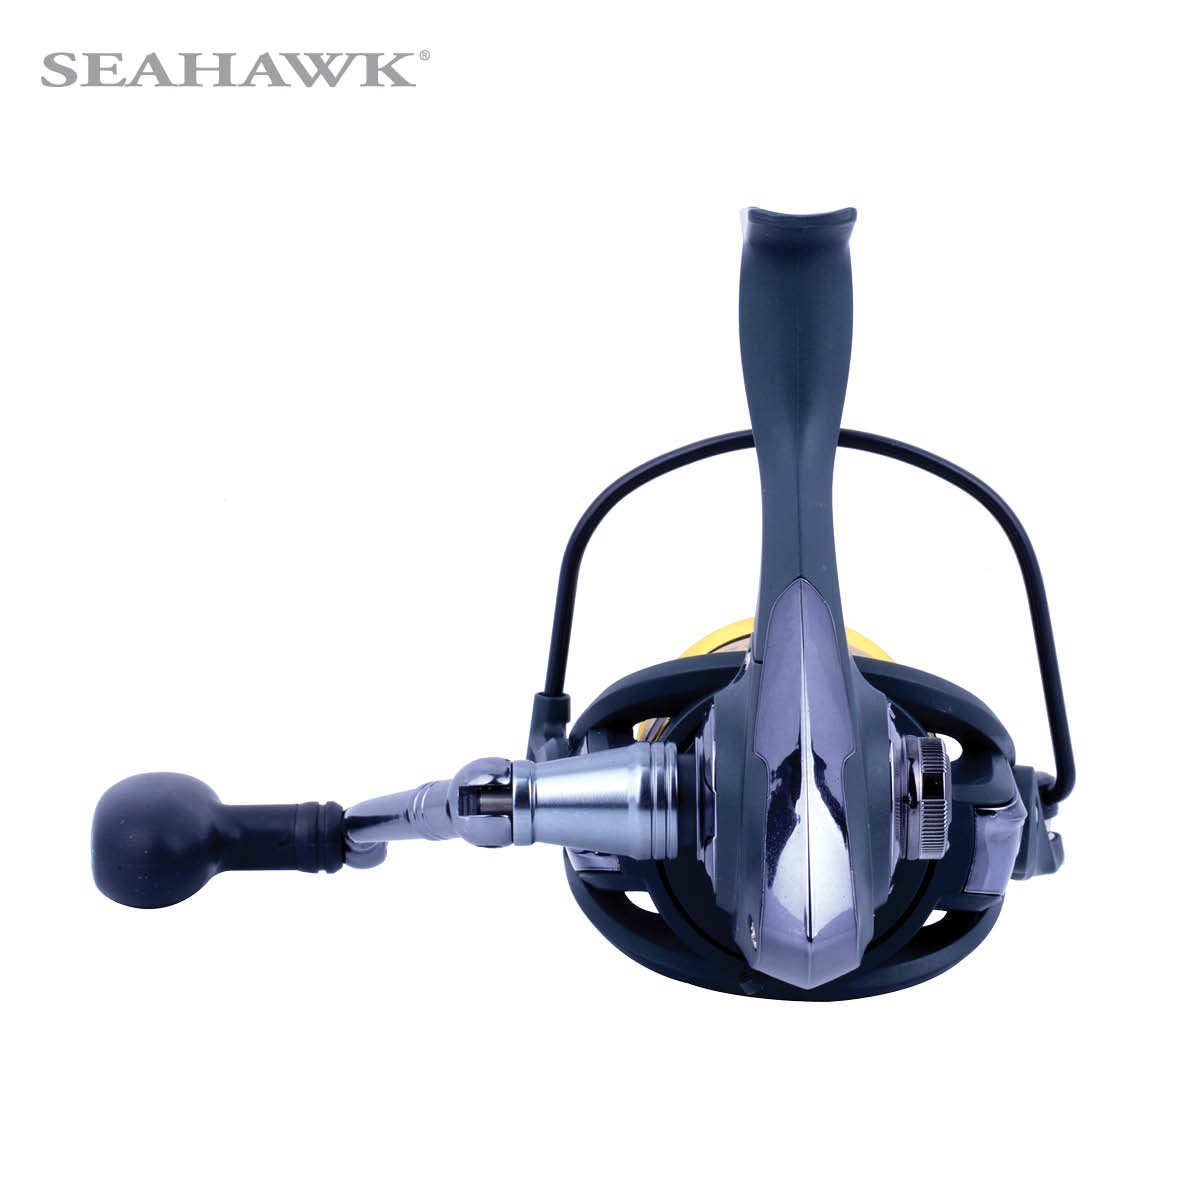 Seahawk Fishing Malaysia  Tournament Pro Spinning Reel